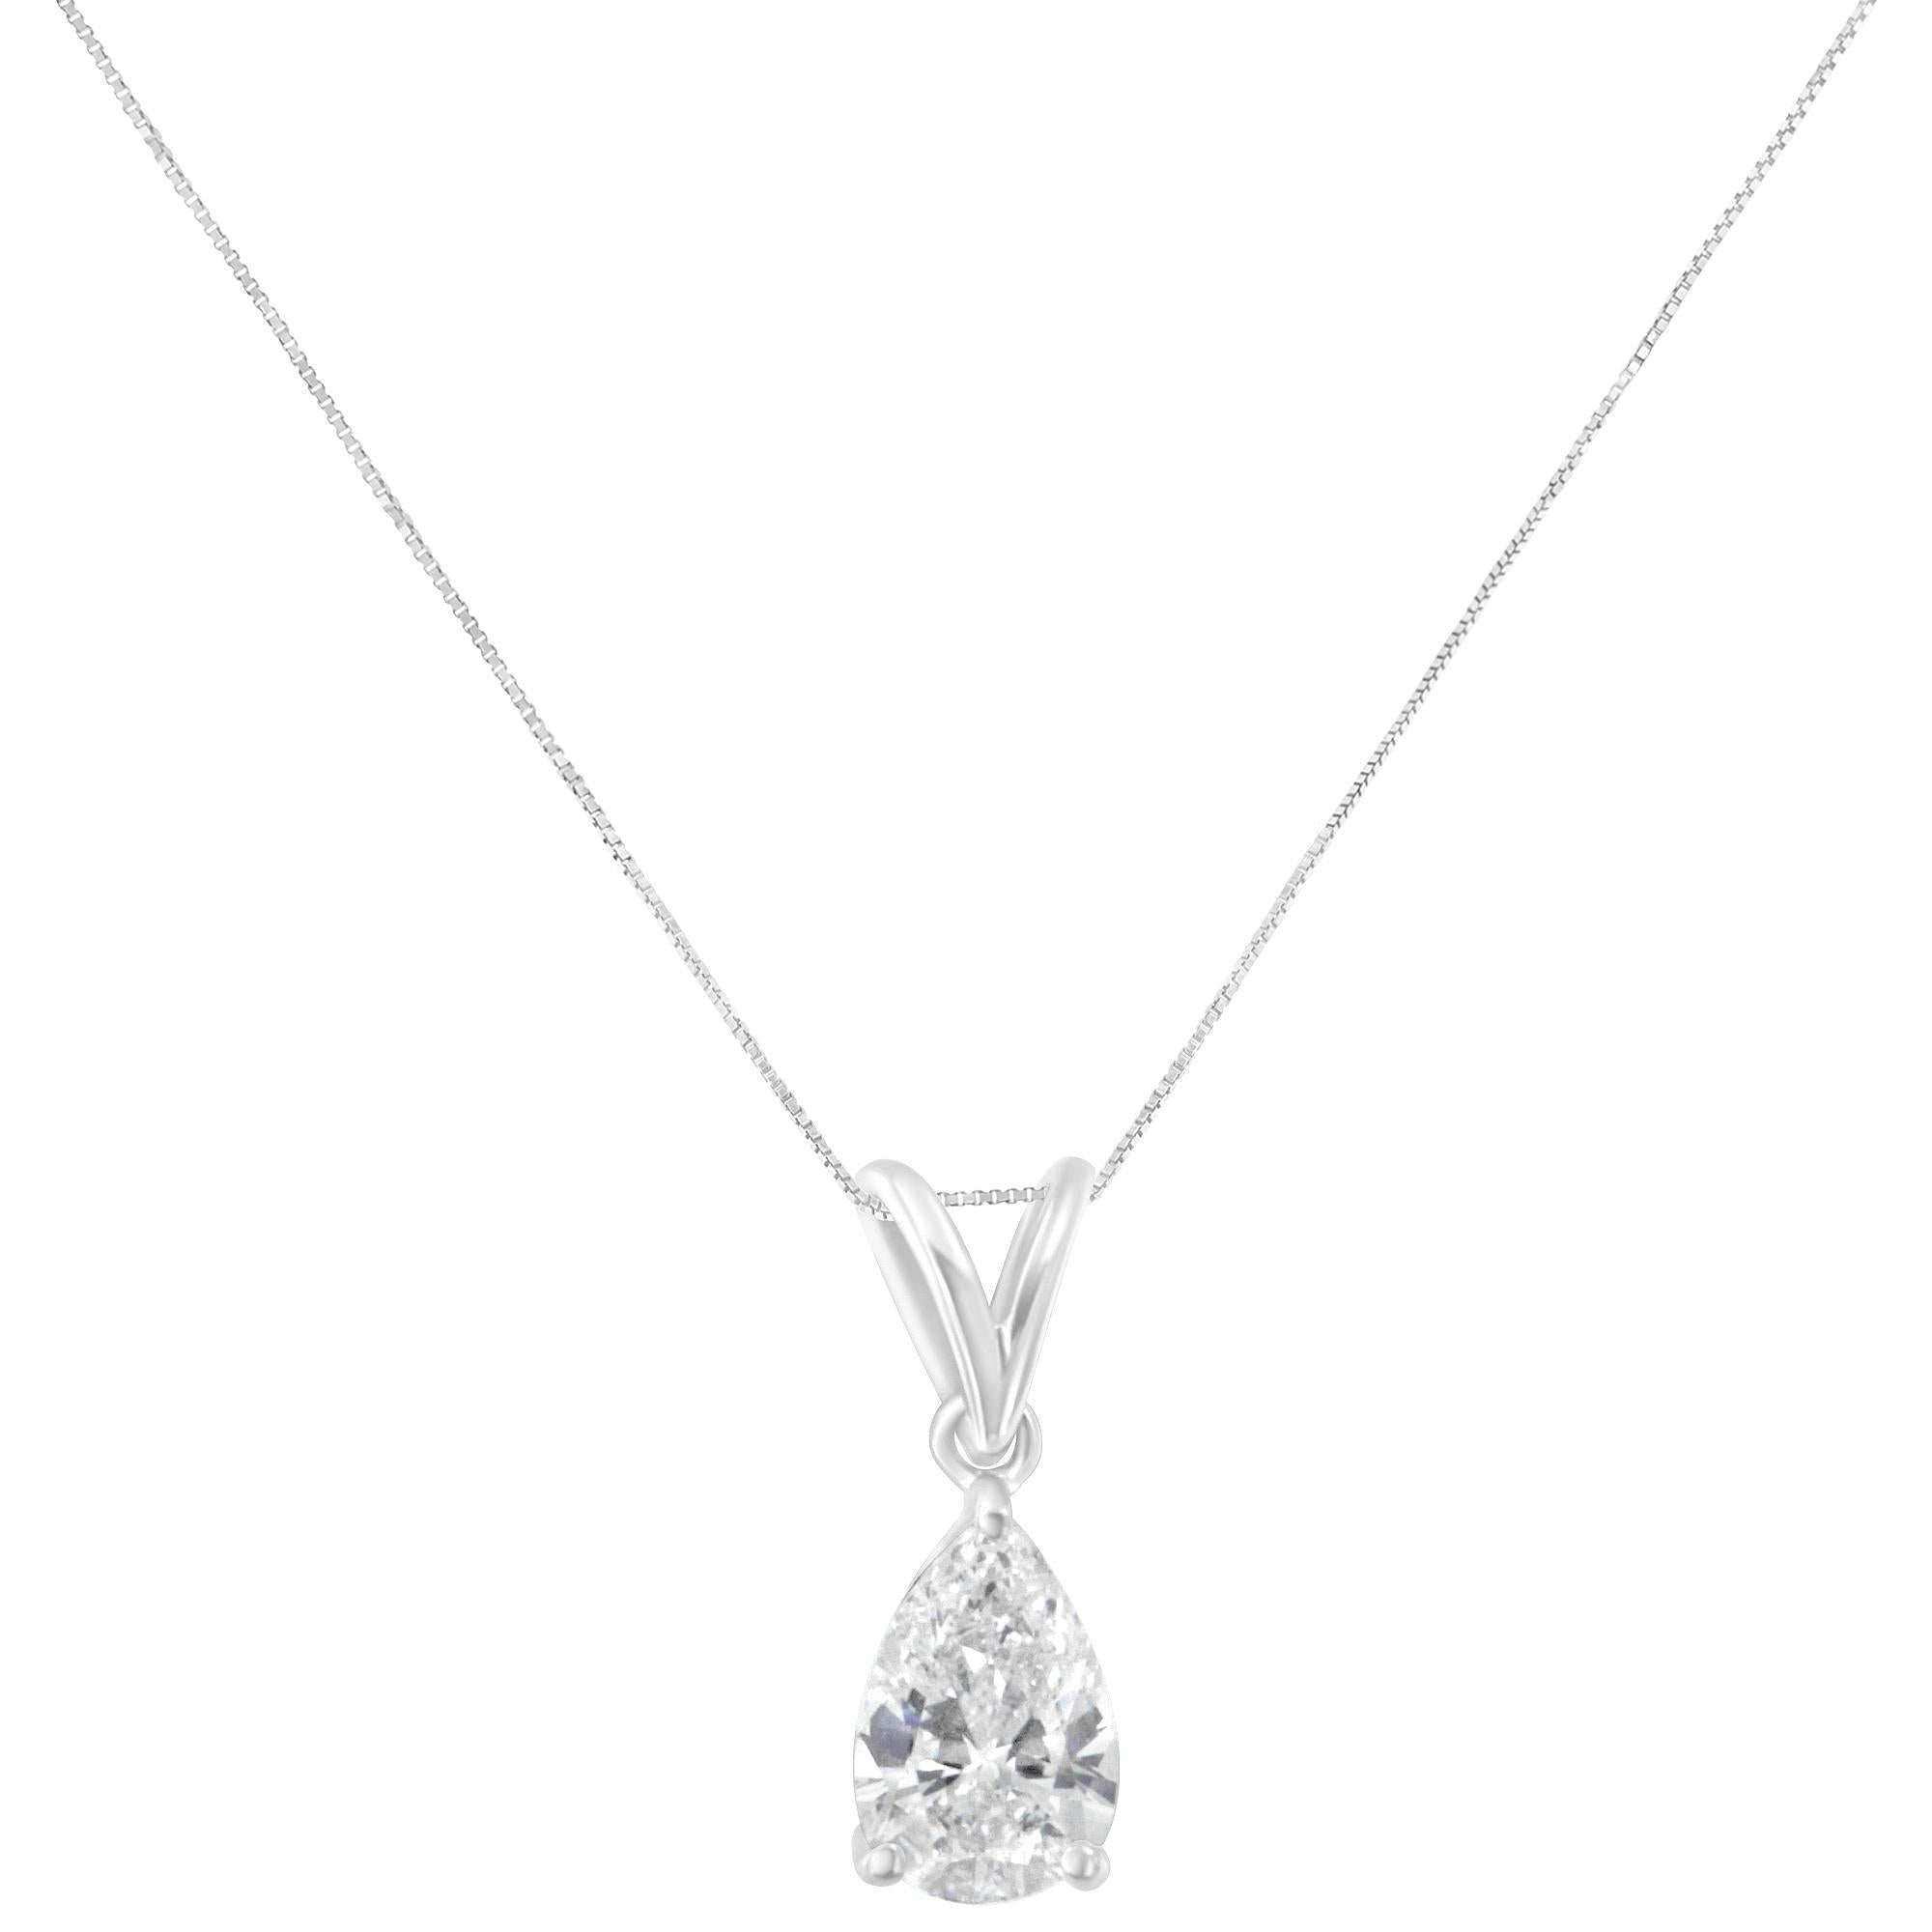 Exquisite IGI Certified 10K White Gold 1/2 Cttw Diamond Pear Pendant Necklace